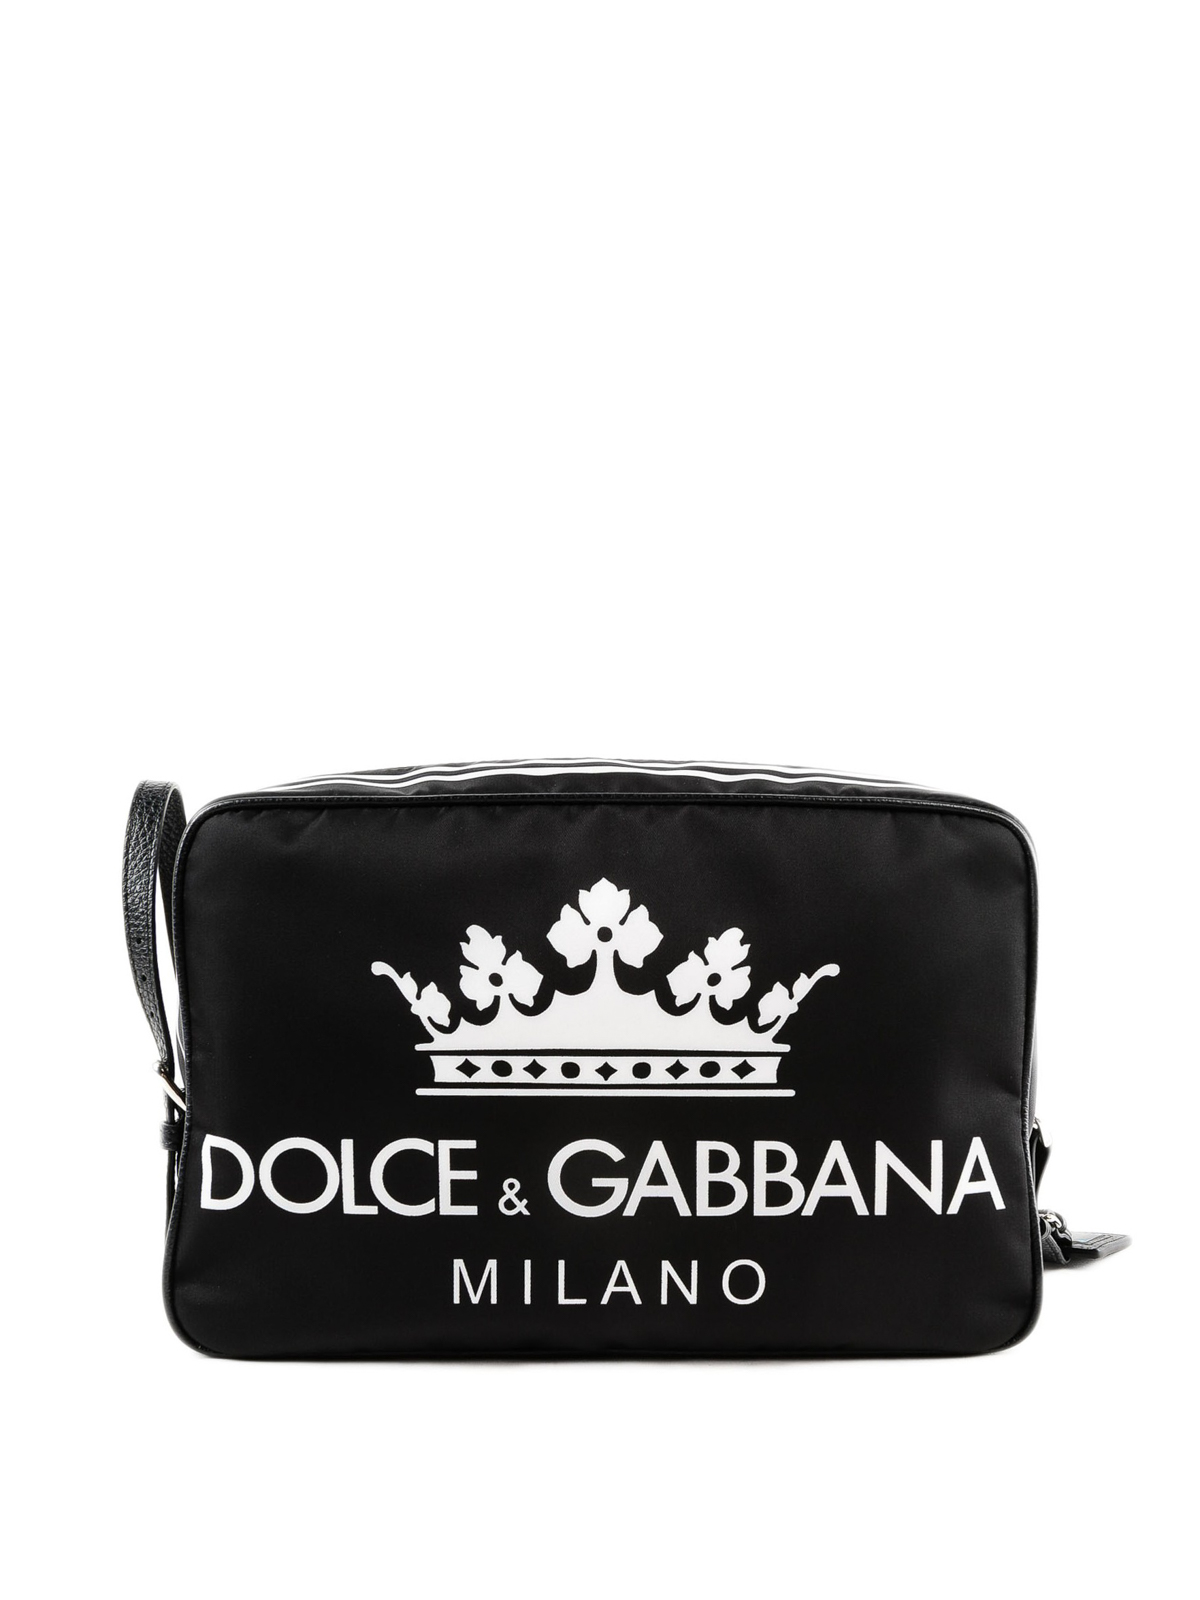 Dolce Gabbana Mens Bags